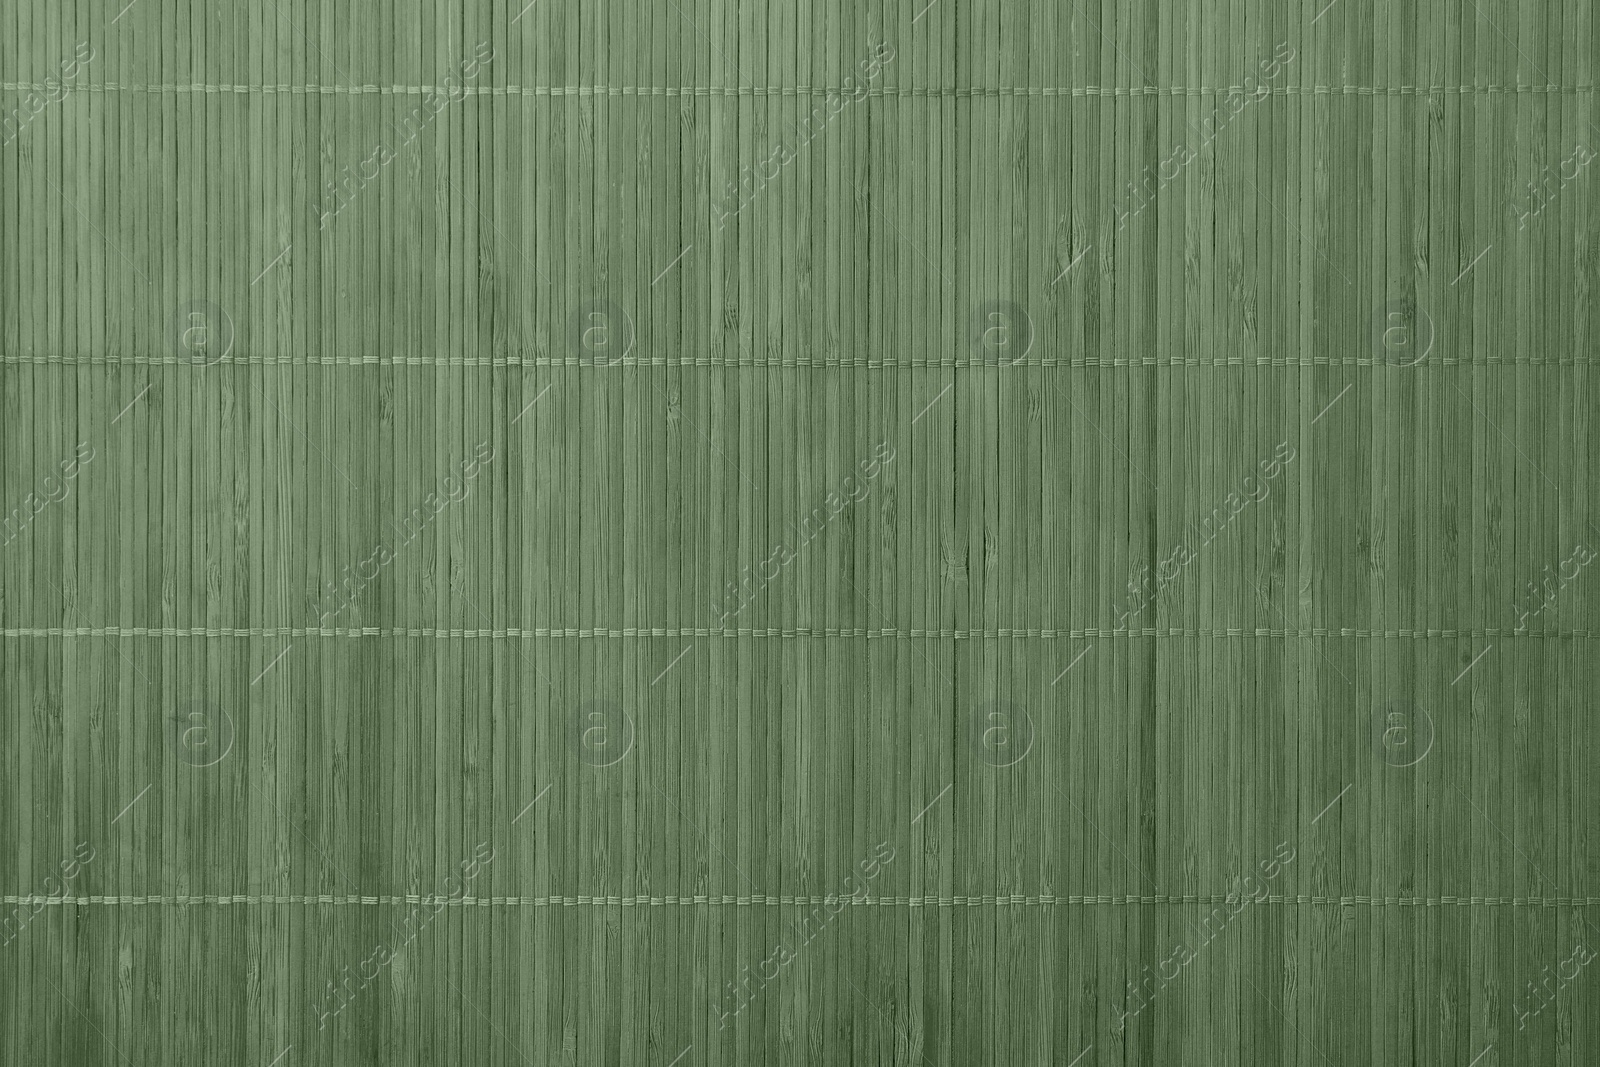 Image of Sage green bamboo mat as background, closeup